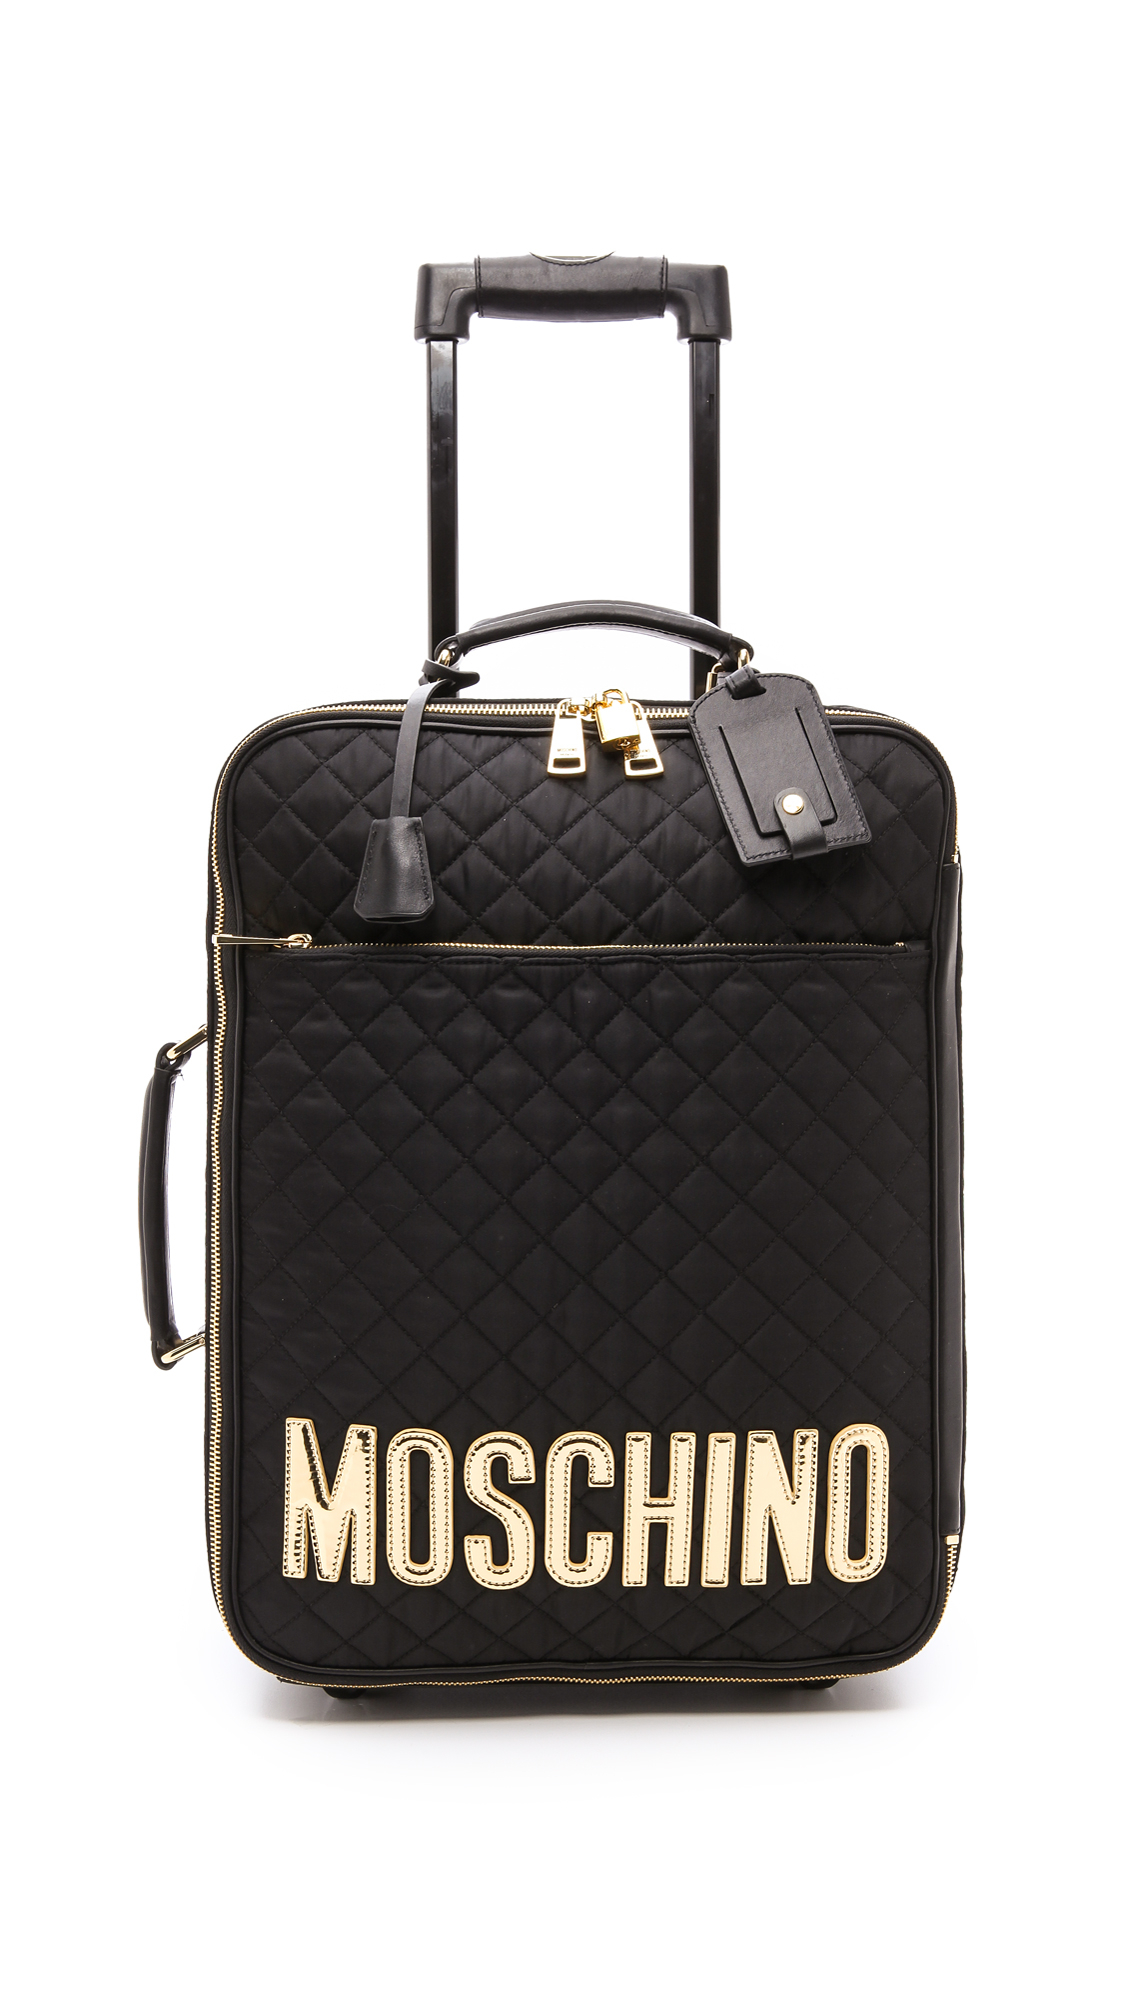 Moschino Suitcase - Black - Lyst